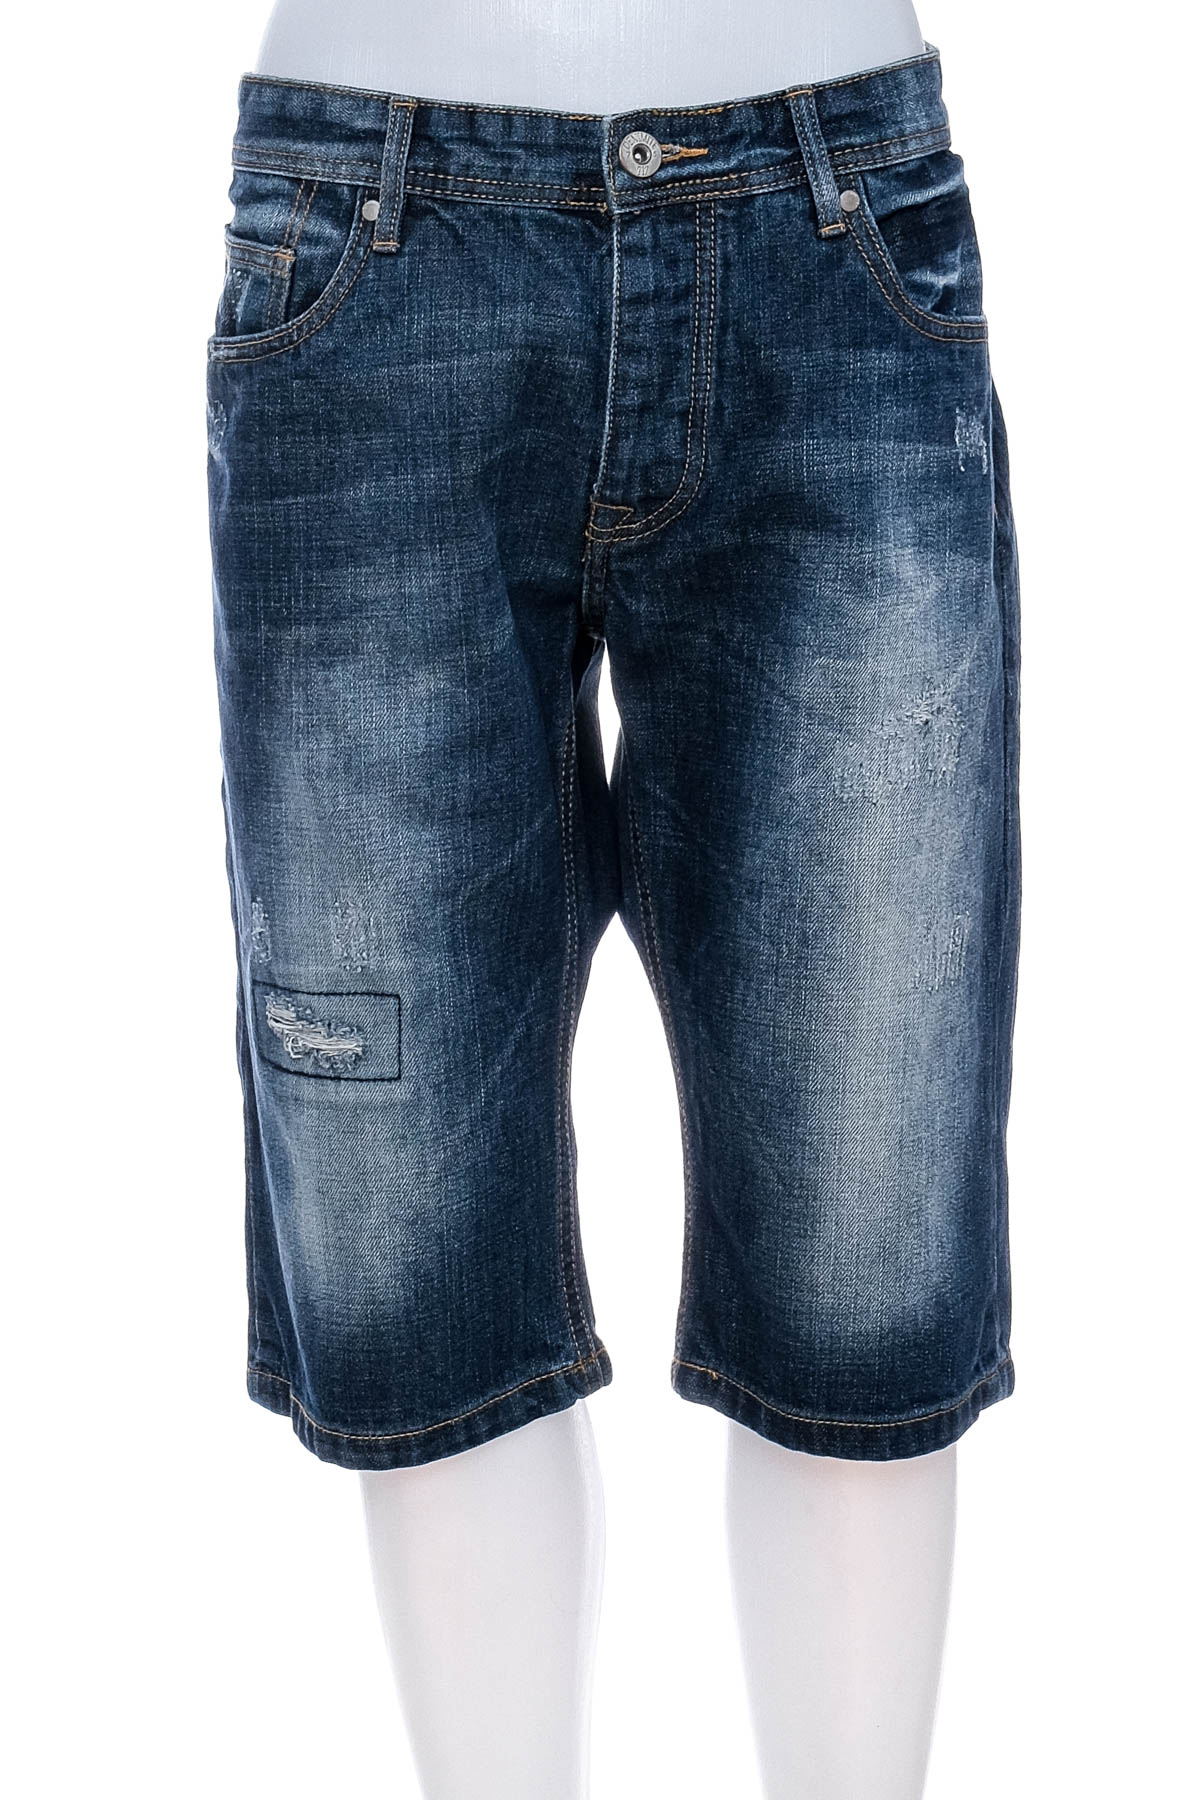 Pantaloni scurți bărbați - CKH Denim - 0